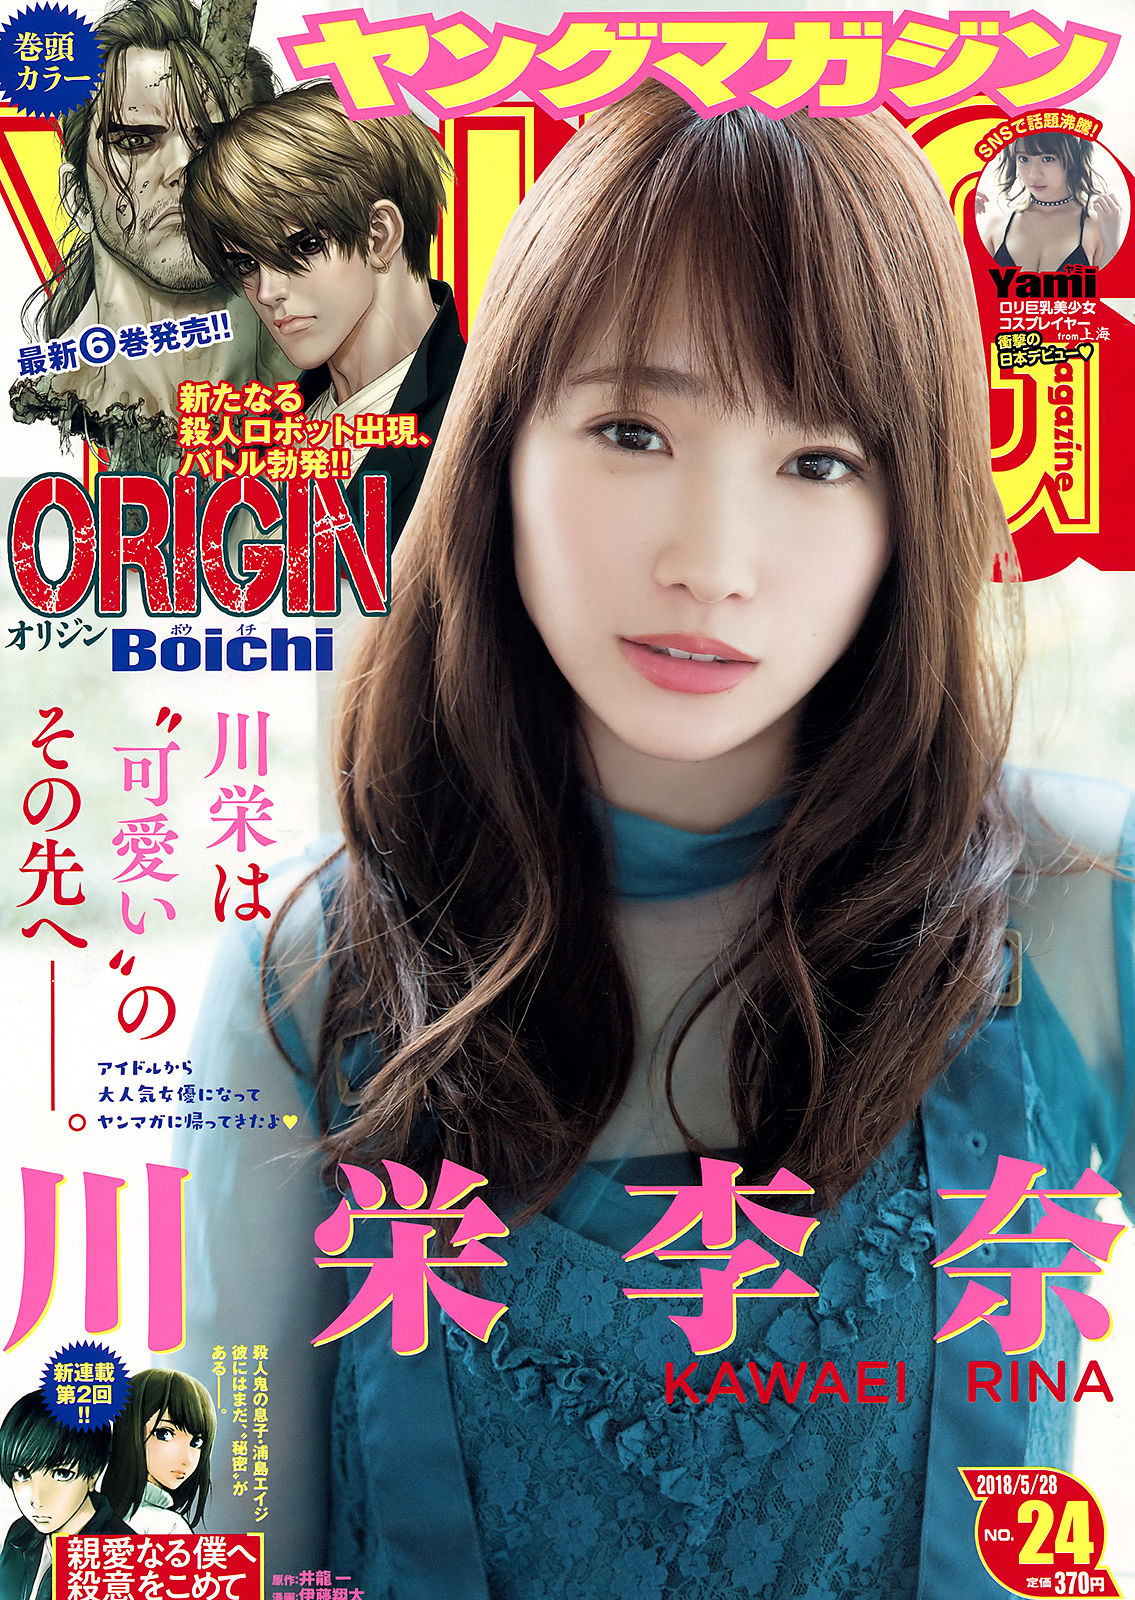 Young magazine